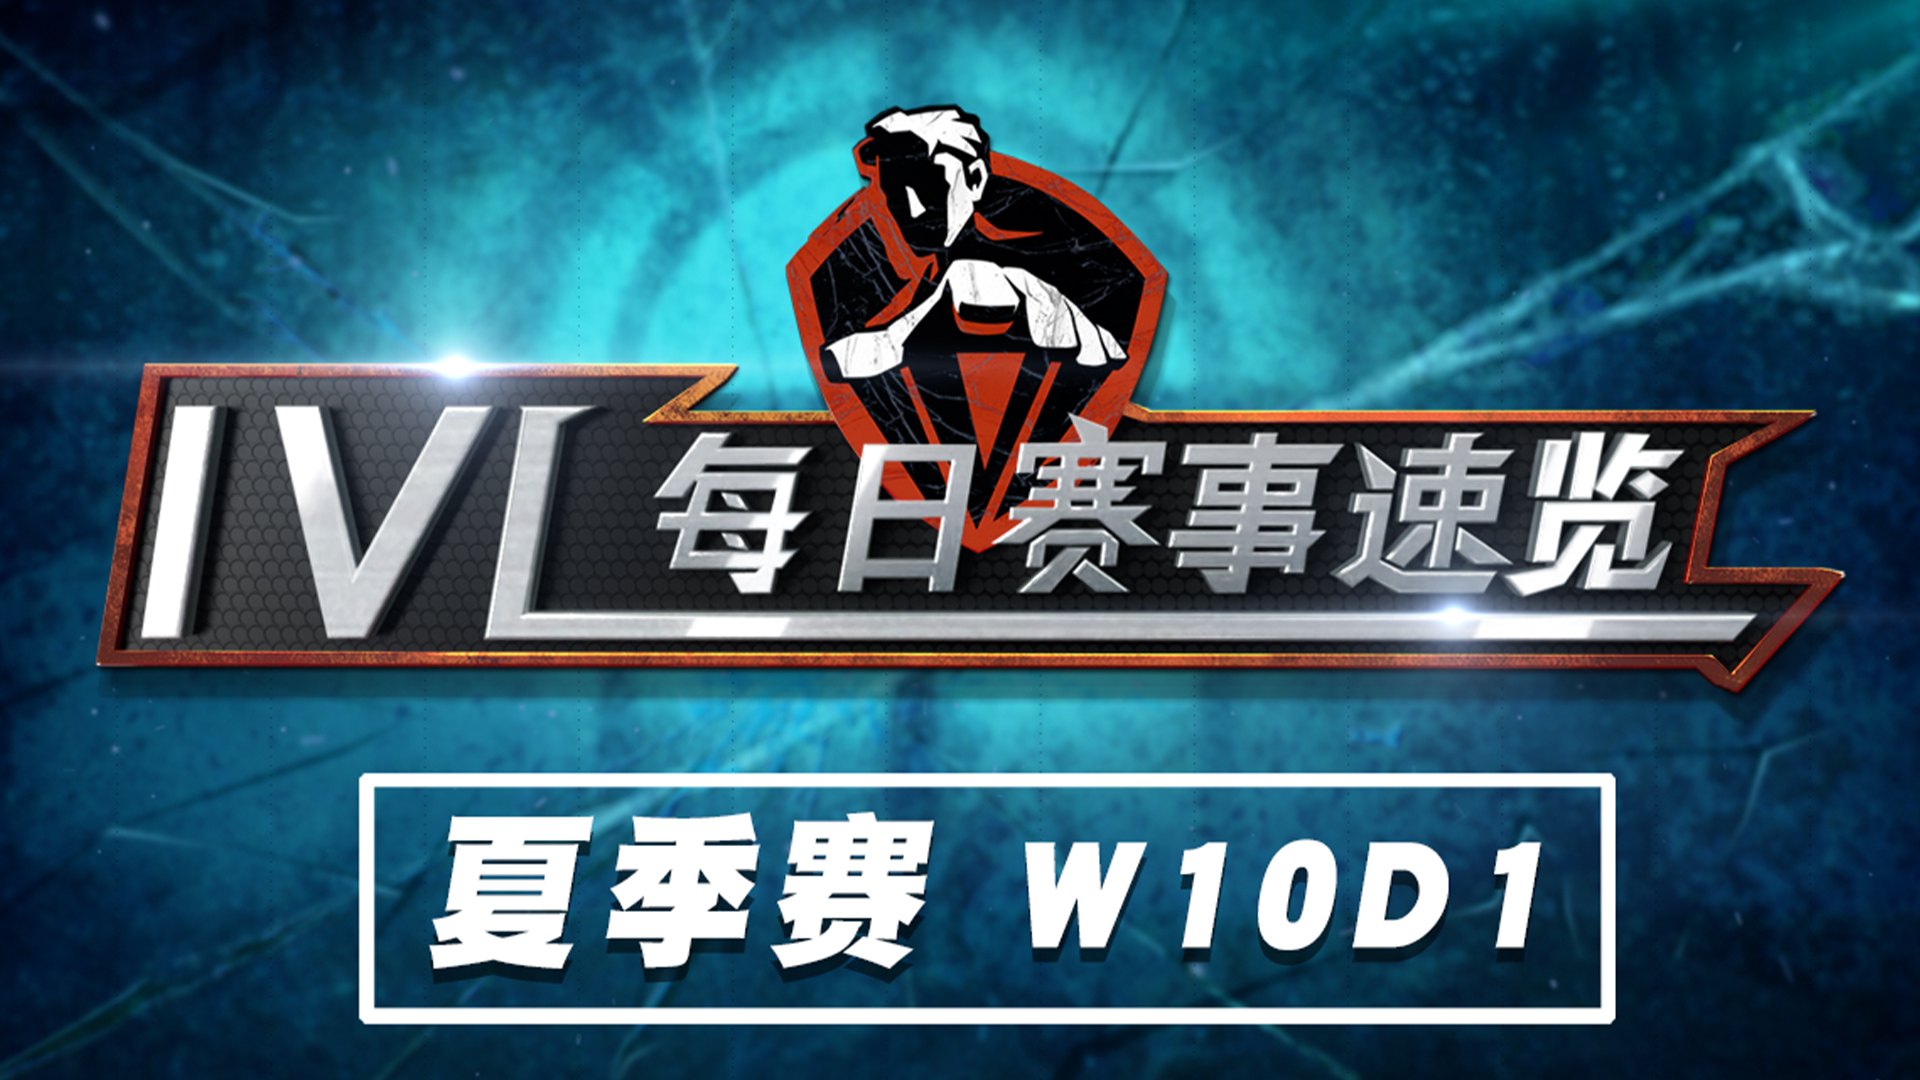 【2020IVL】夏季赛W10D1 赛事速览